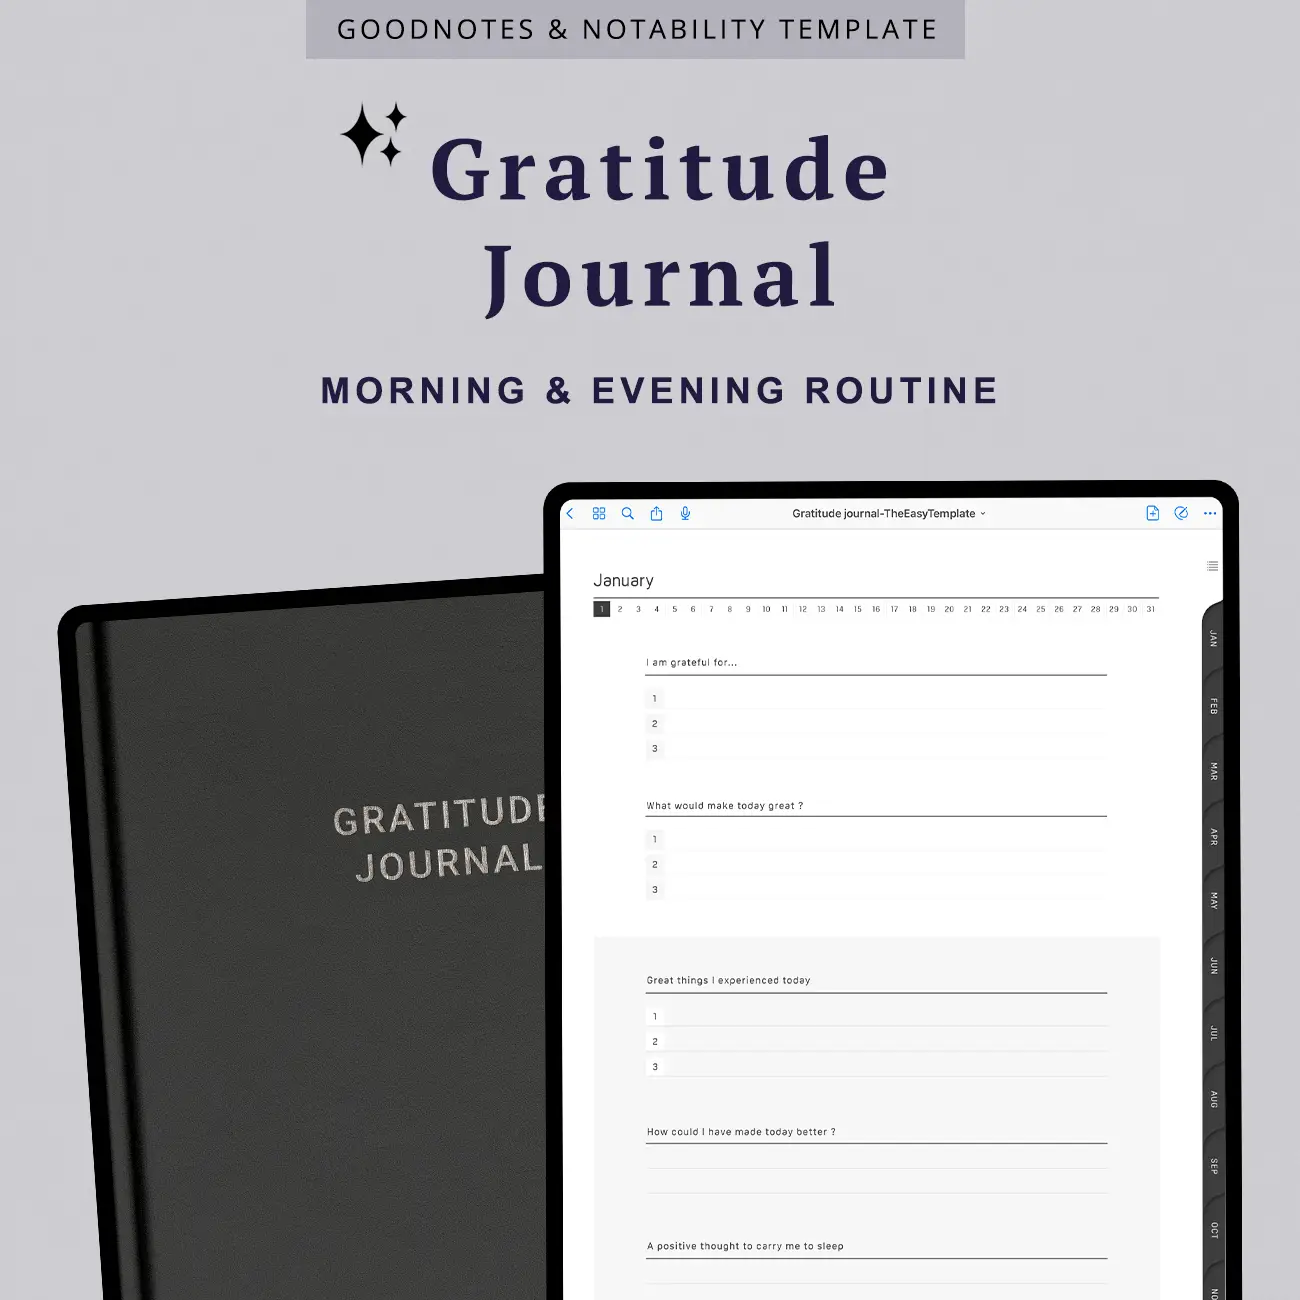 Journal de gratitude [pdf]